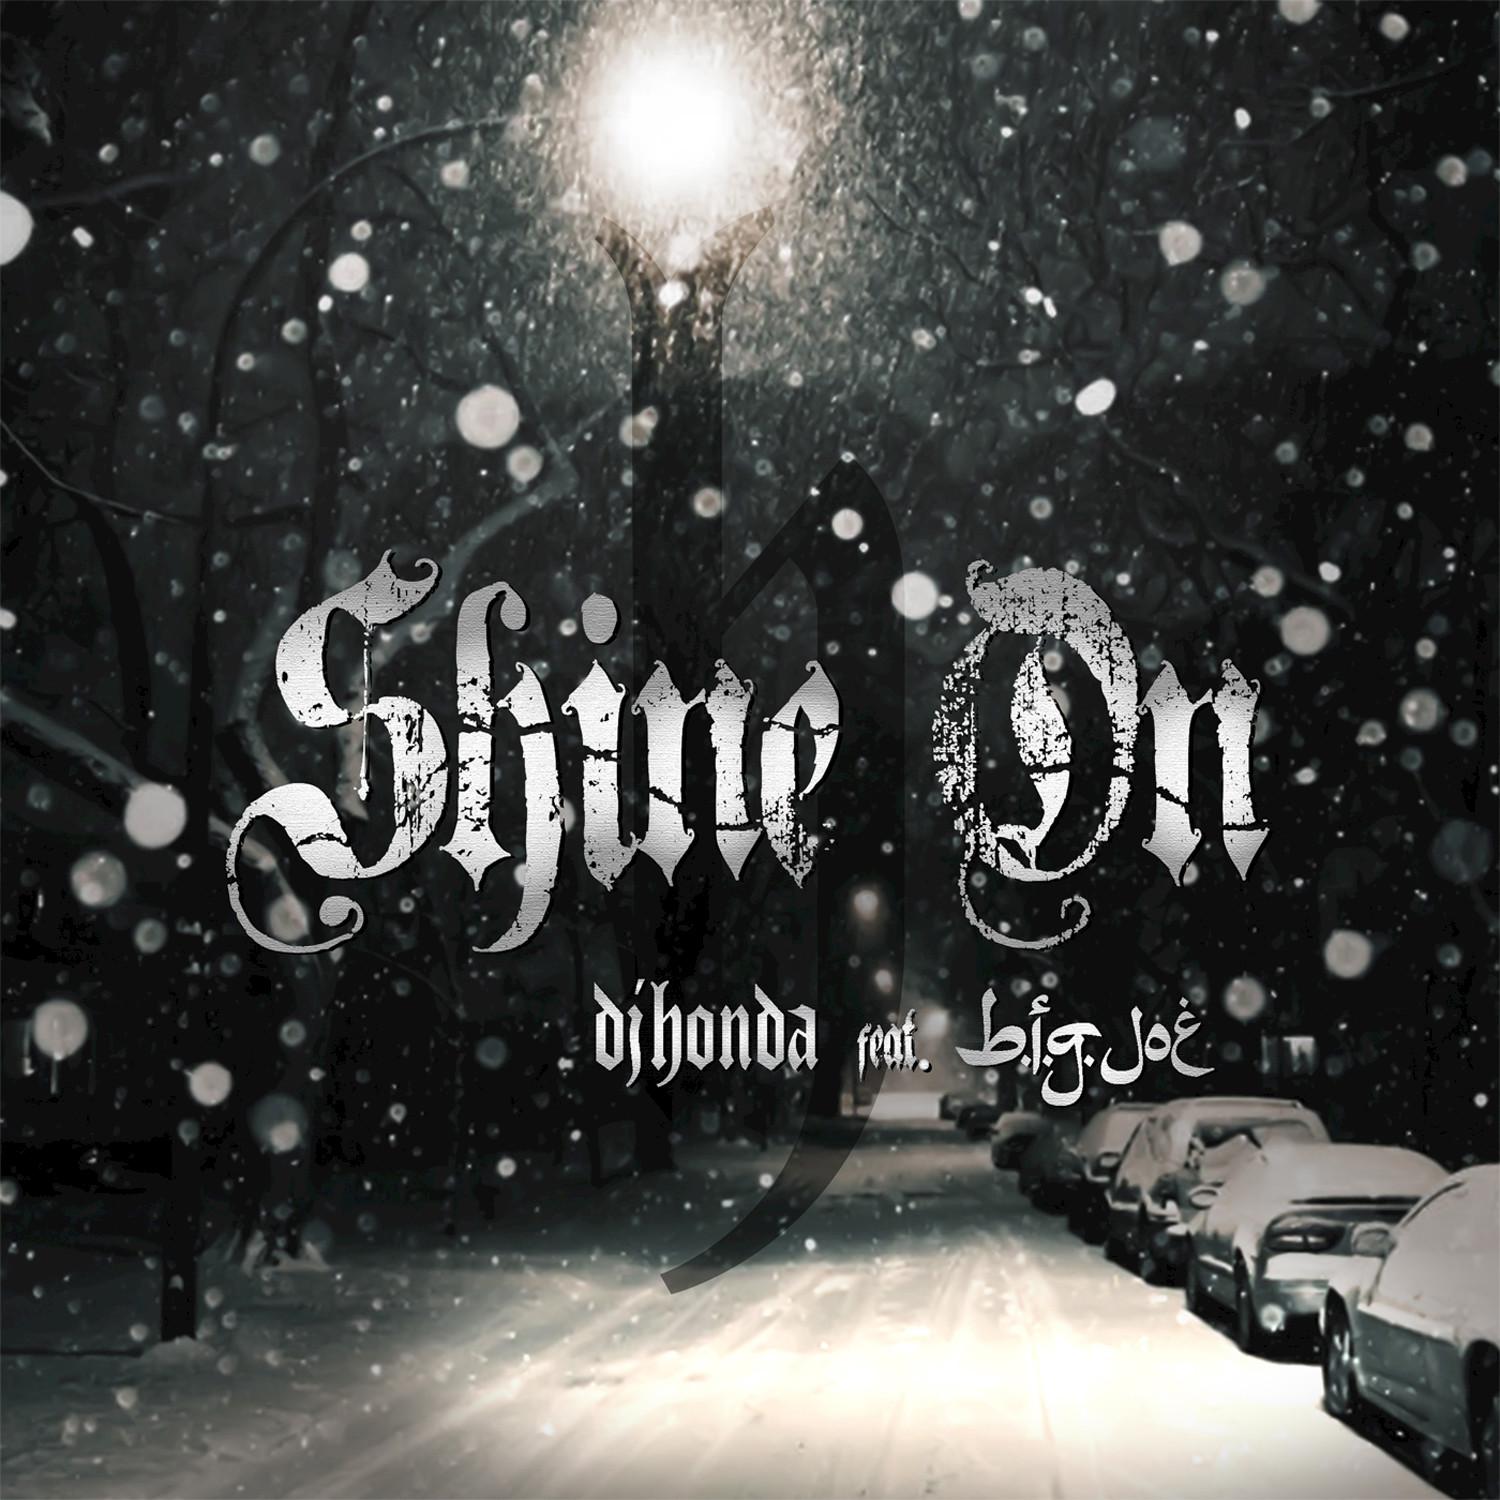 Shine On (dj honda feat. B.I.G.JOE)